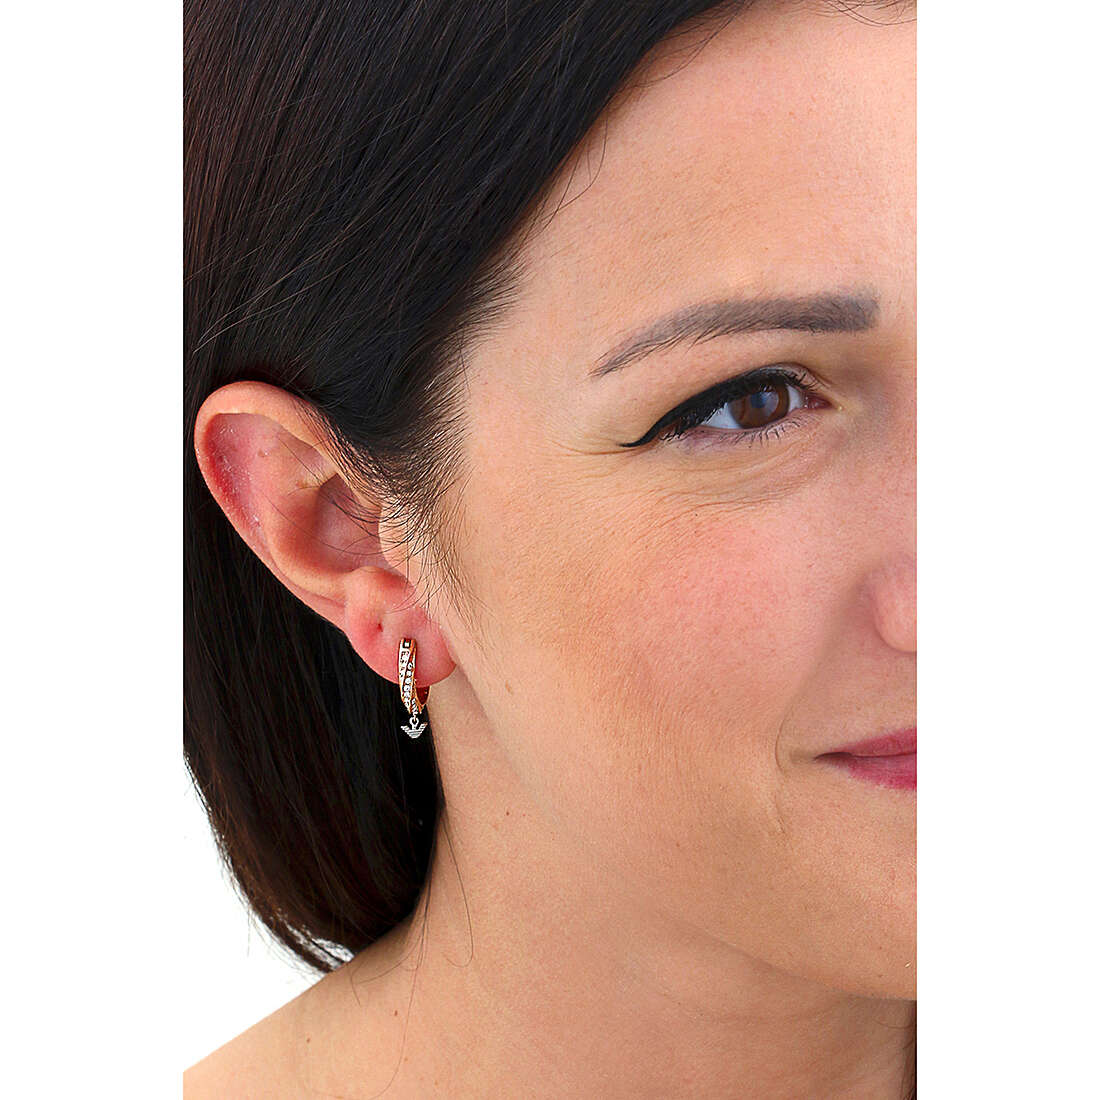 Emporio Armani earrings woman EGS3006221 wearing